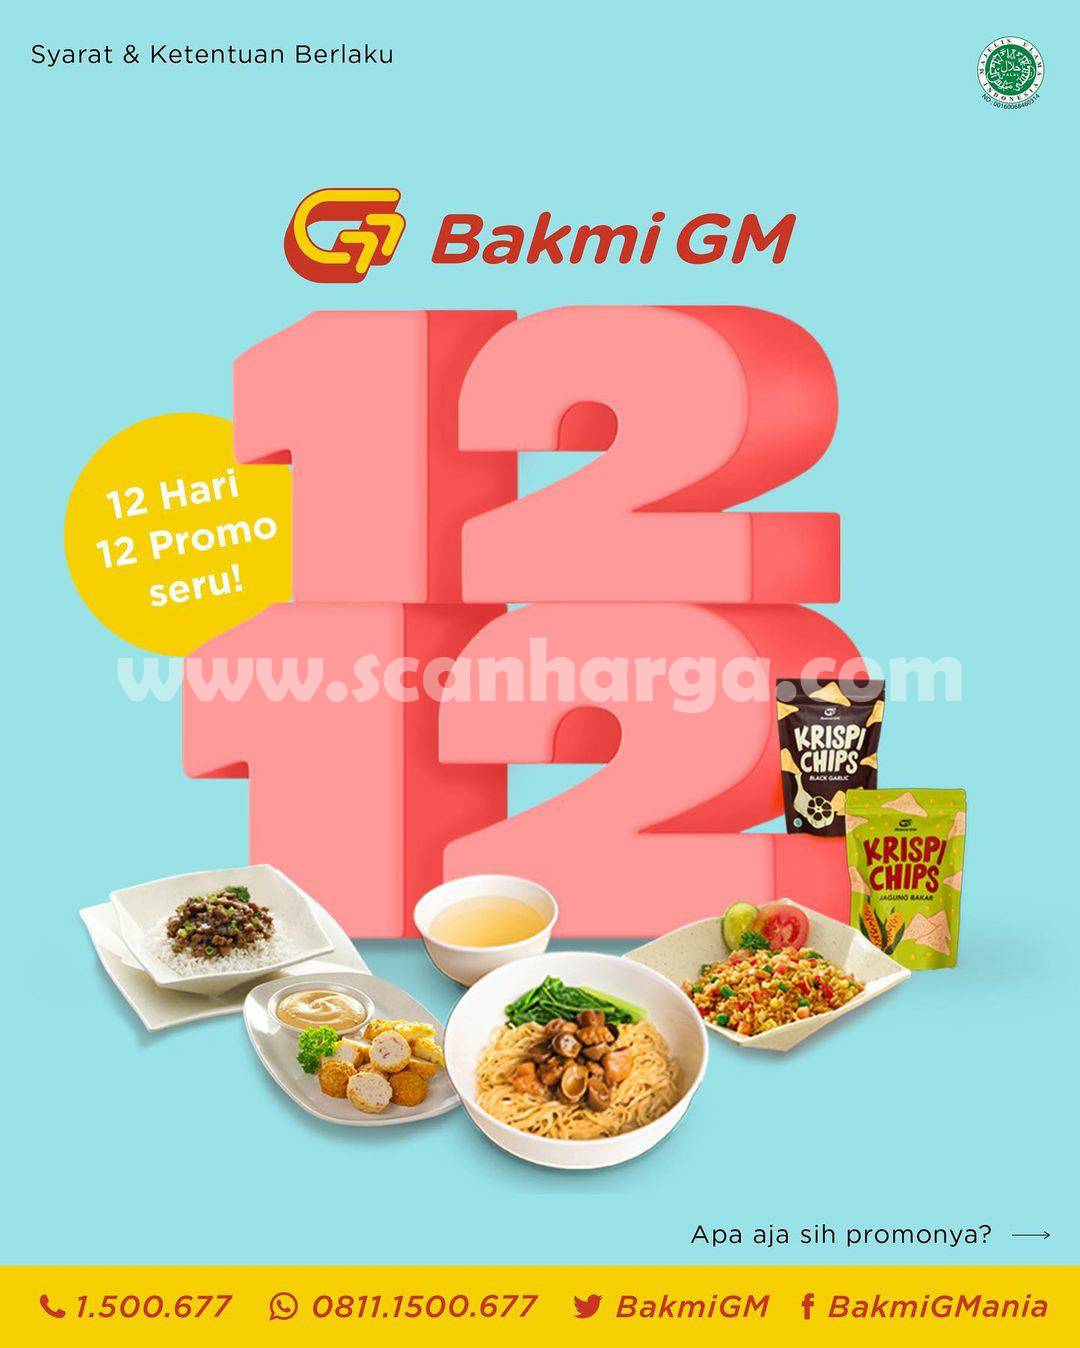 Promo BAKMI GM SERU 12.12 - harga mulai Rp 1.000 sampai Rp 12.000